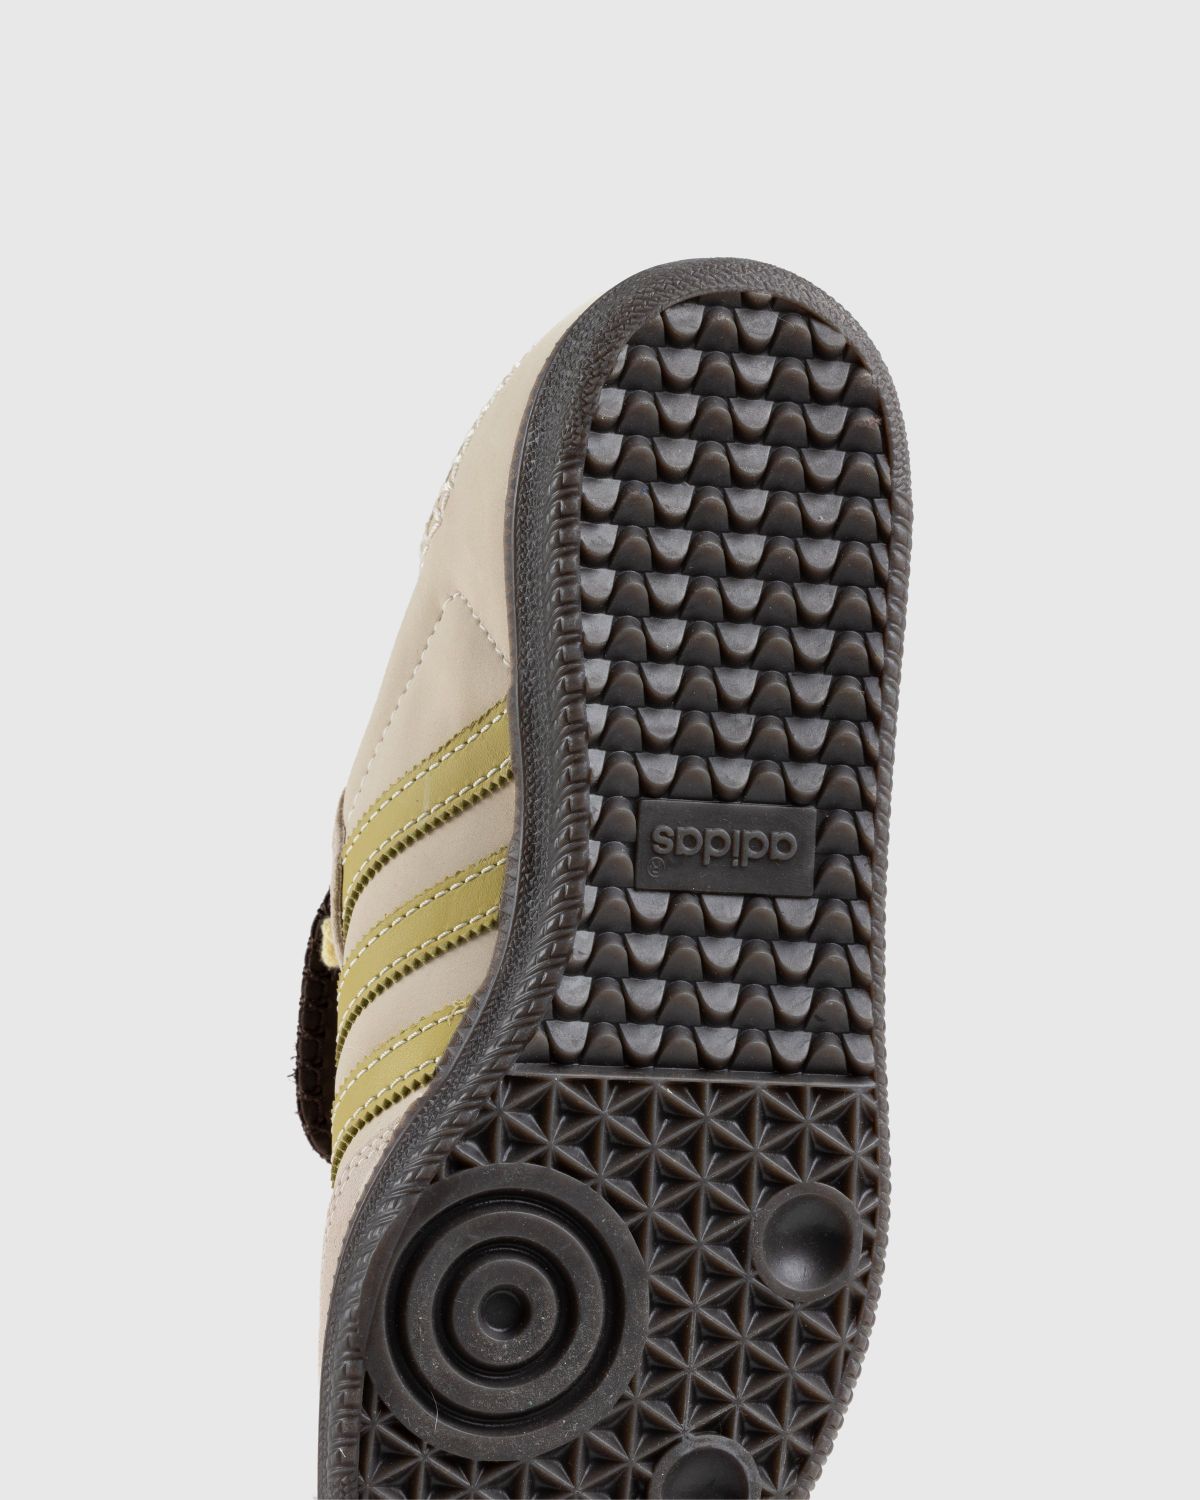 Adidas x Wales Bonner – Samba Nubuck Ecru Tint/Almost Yellow/Dark Brown - Sneakers - Beige - Image 6